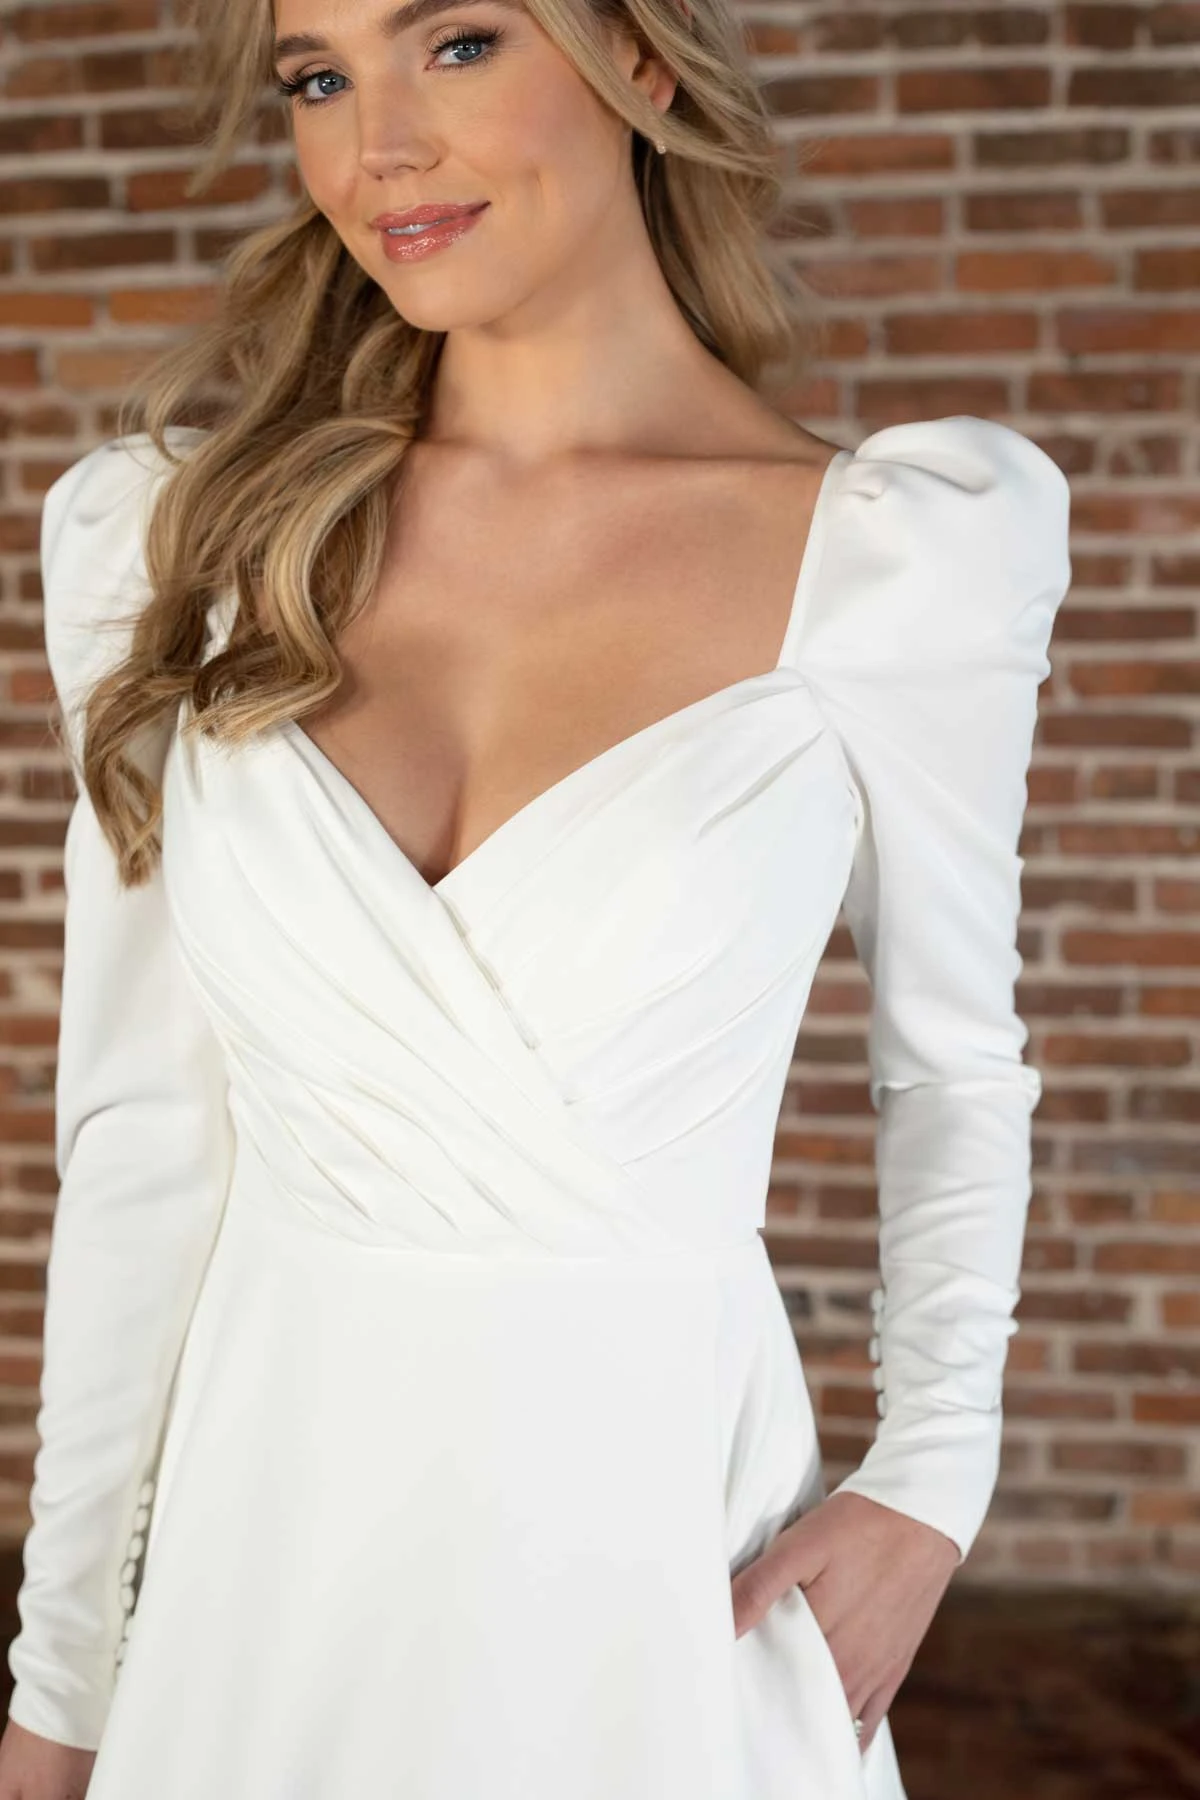 d3752 Chic Long Sleeve A-Line Satin Wedding Dress with Soft V-Neckline  by Essense of Australia